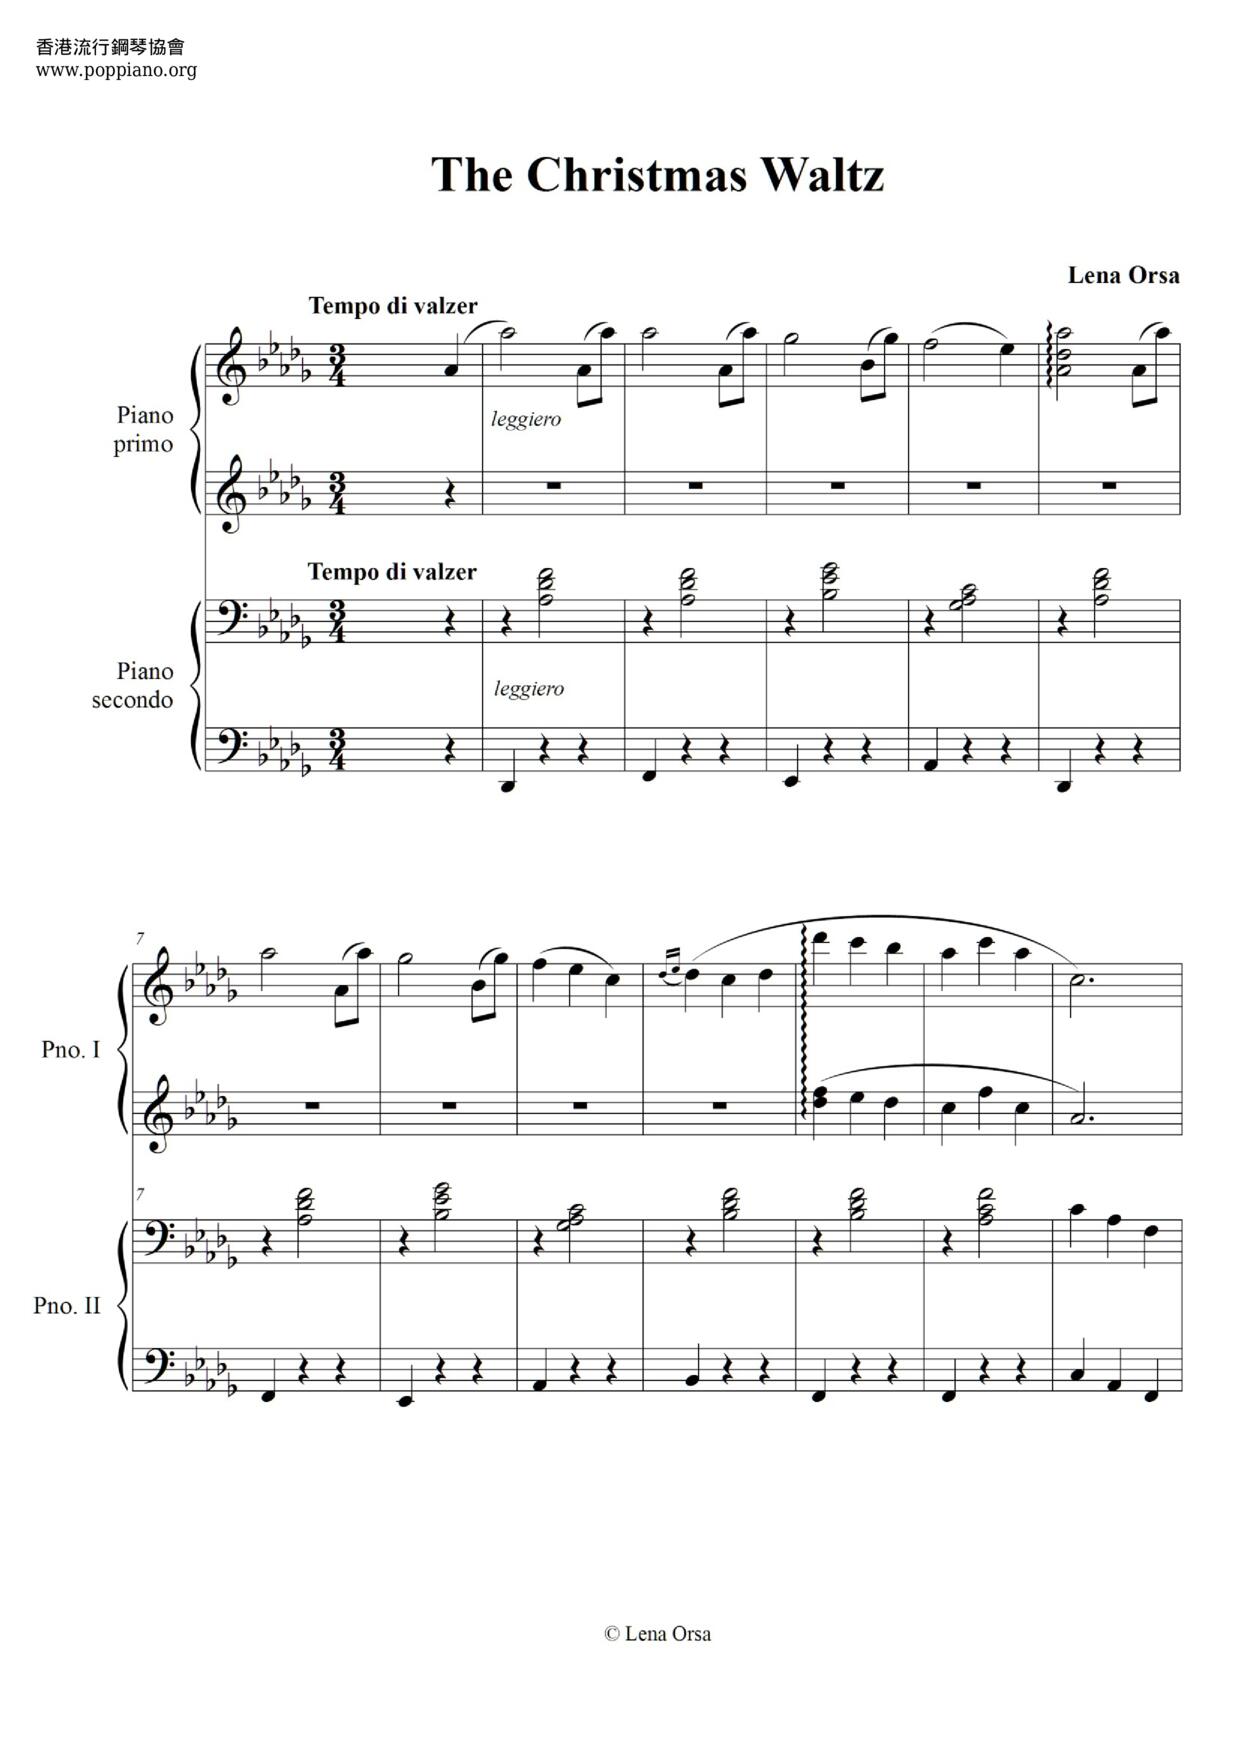 The Christmas Waltz Score